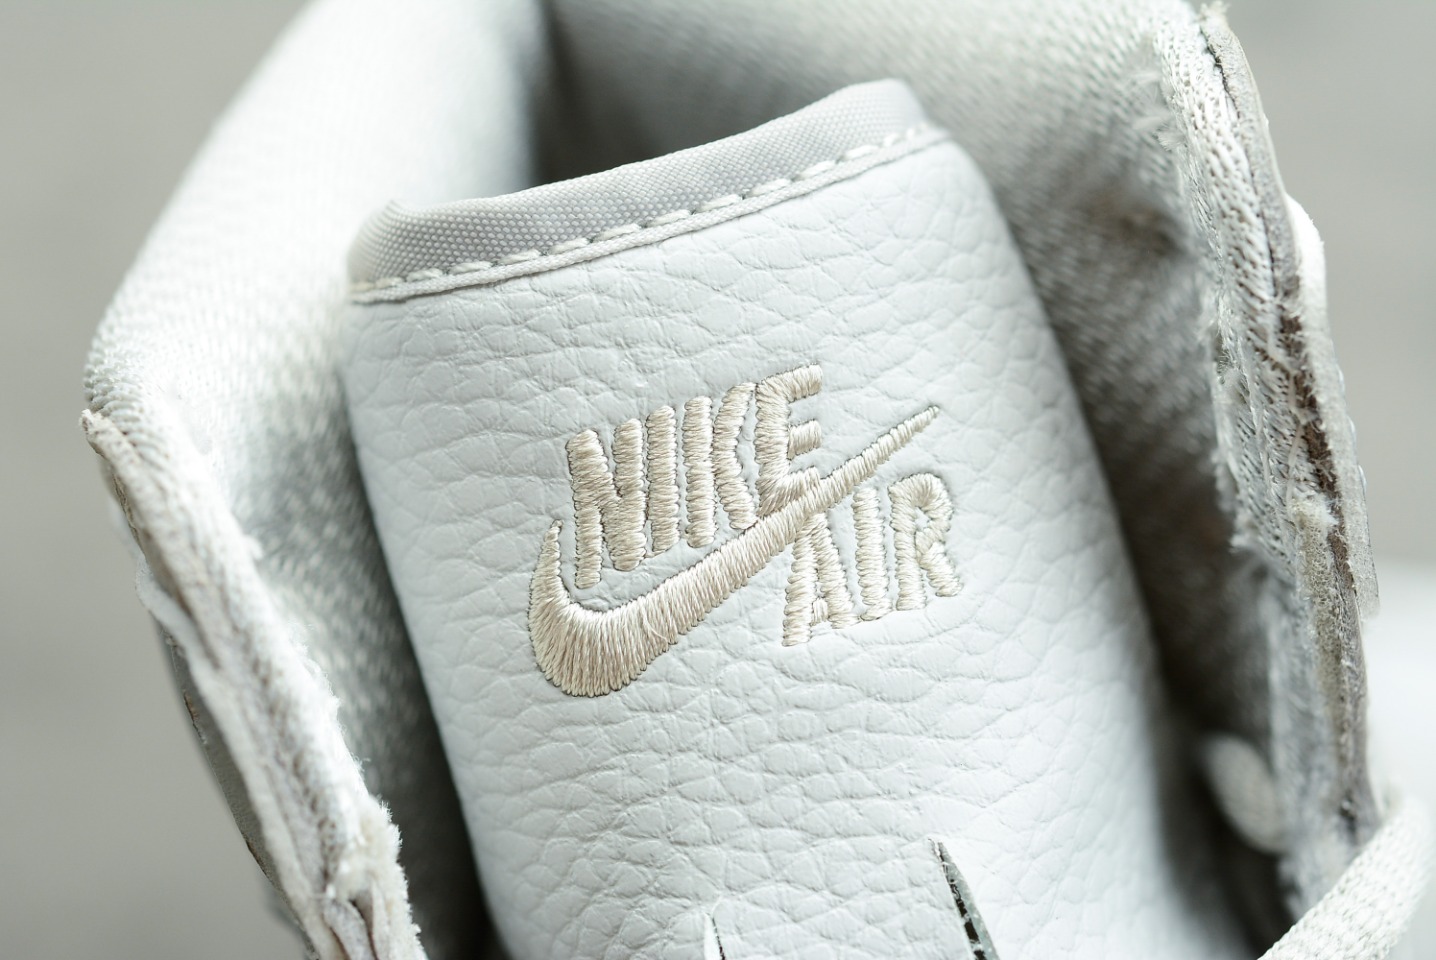 Nike Sneaker Air Jordan1 High AJ1 in White